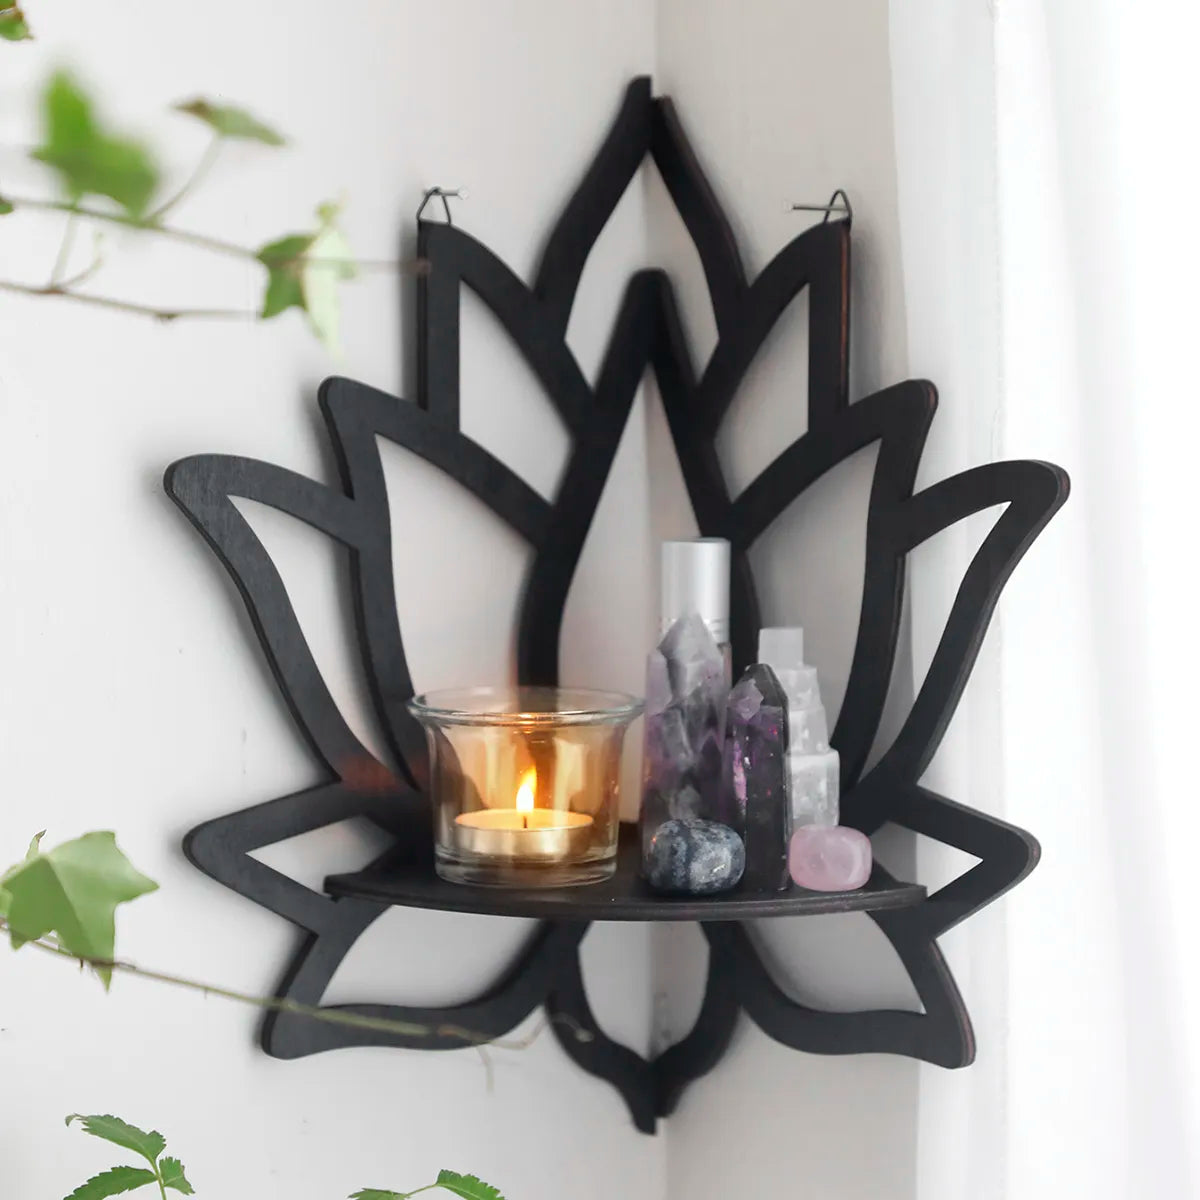 Lotus Crystal Corner Rak Rak Kristal Tampilan Rak Dinding Kayu Hitam Rak Minyak Esensial Dekorasi Witchy Estetika Spiritual